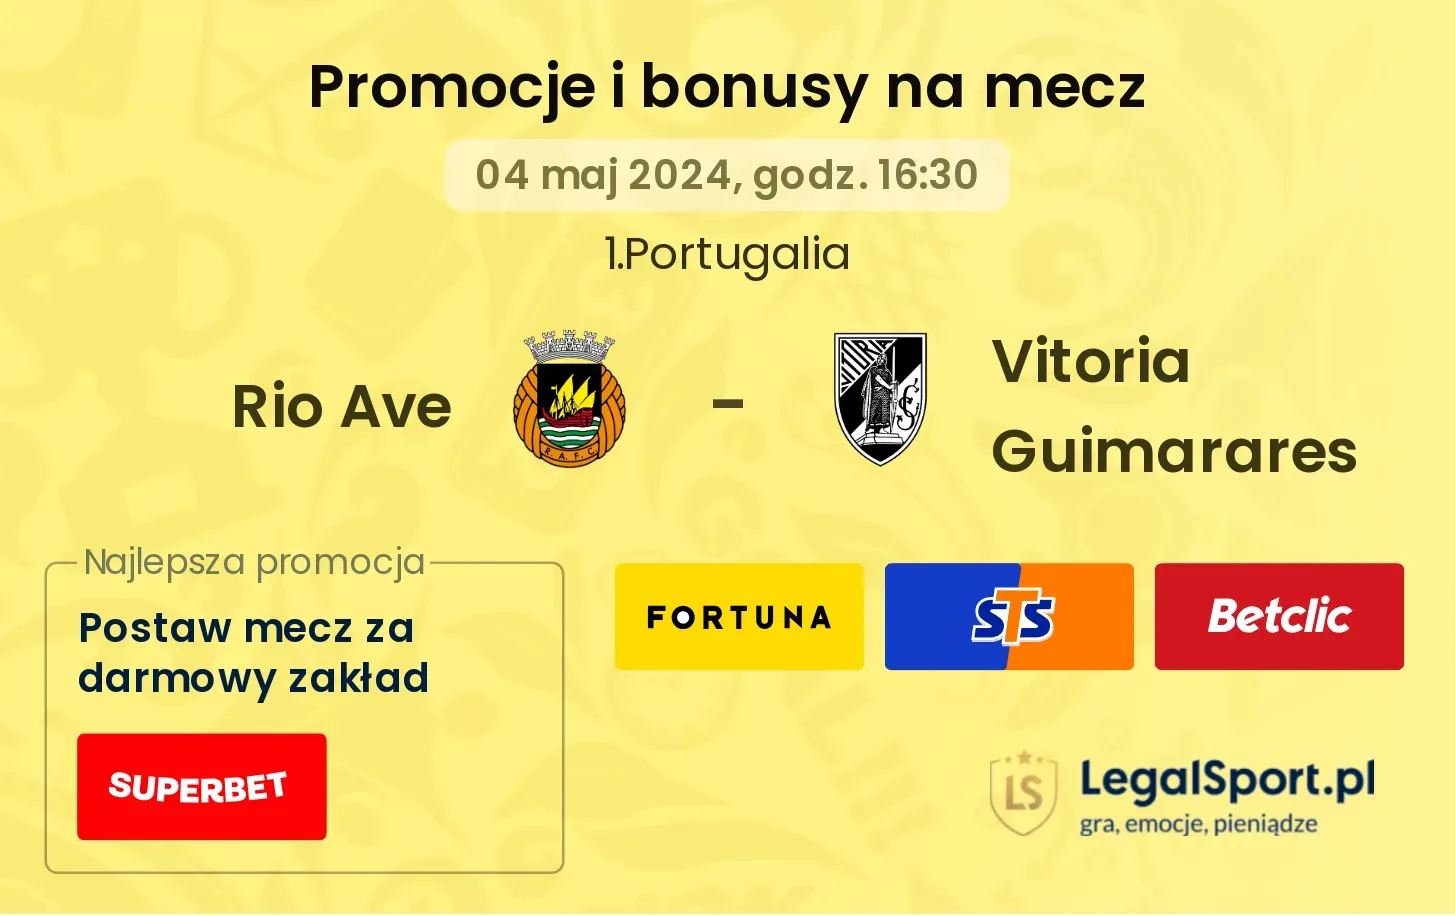 Rio Ave - Vitoria Guimarares promocje bonusy na mecz